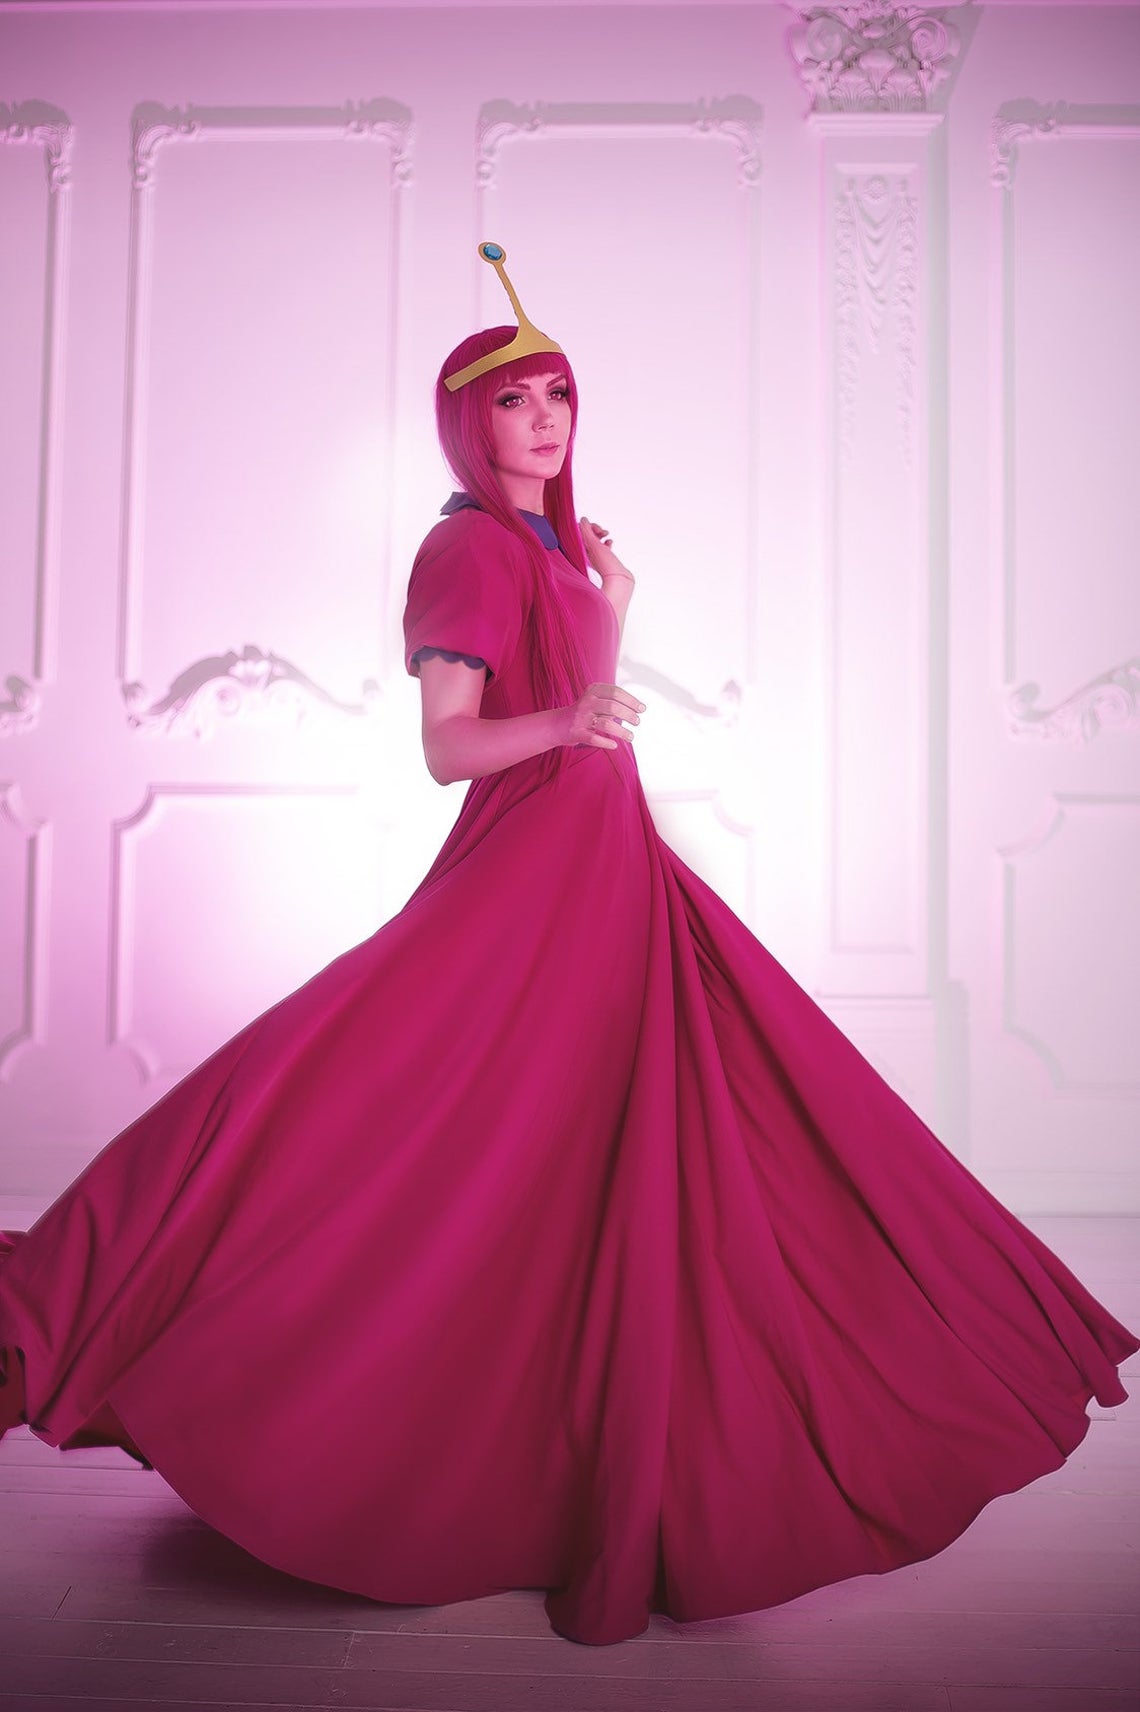 'Northlightsmastery" Bubblegum cosplay costume pink dress